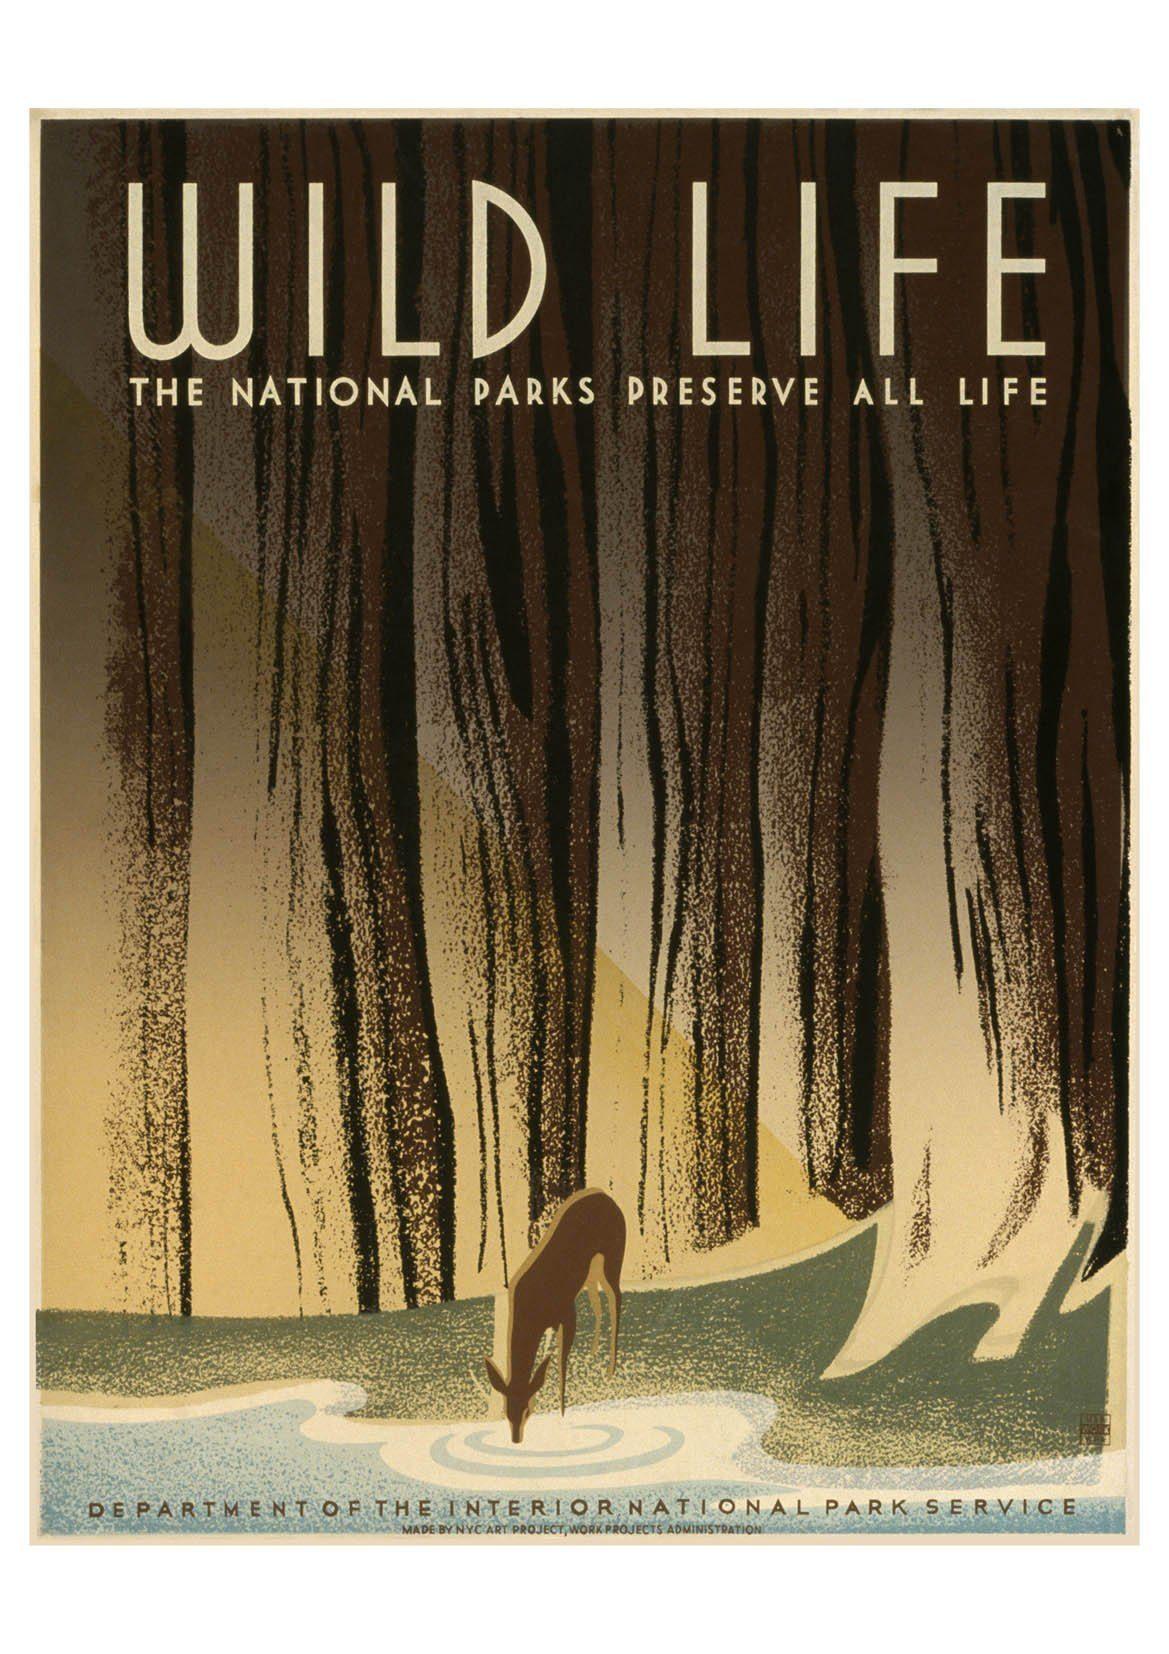 WILD LIFE POSTER: Vintage National Parks Travel Advert - Pimlico Prints